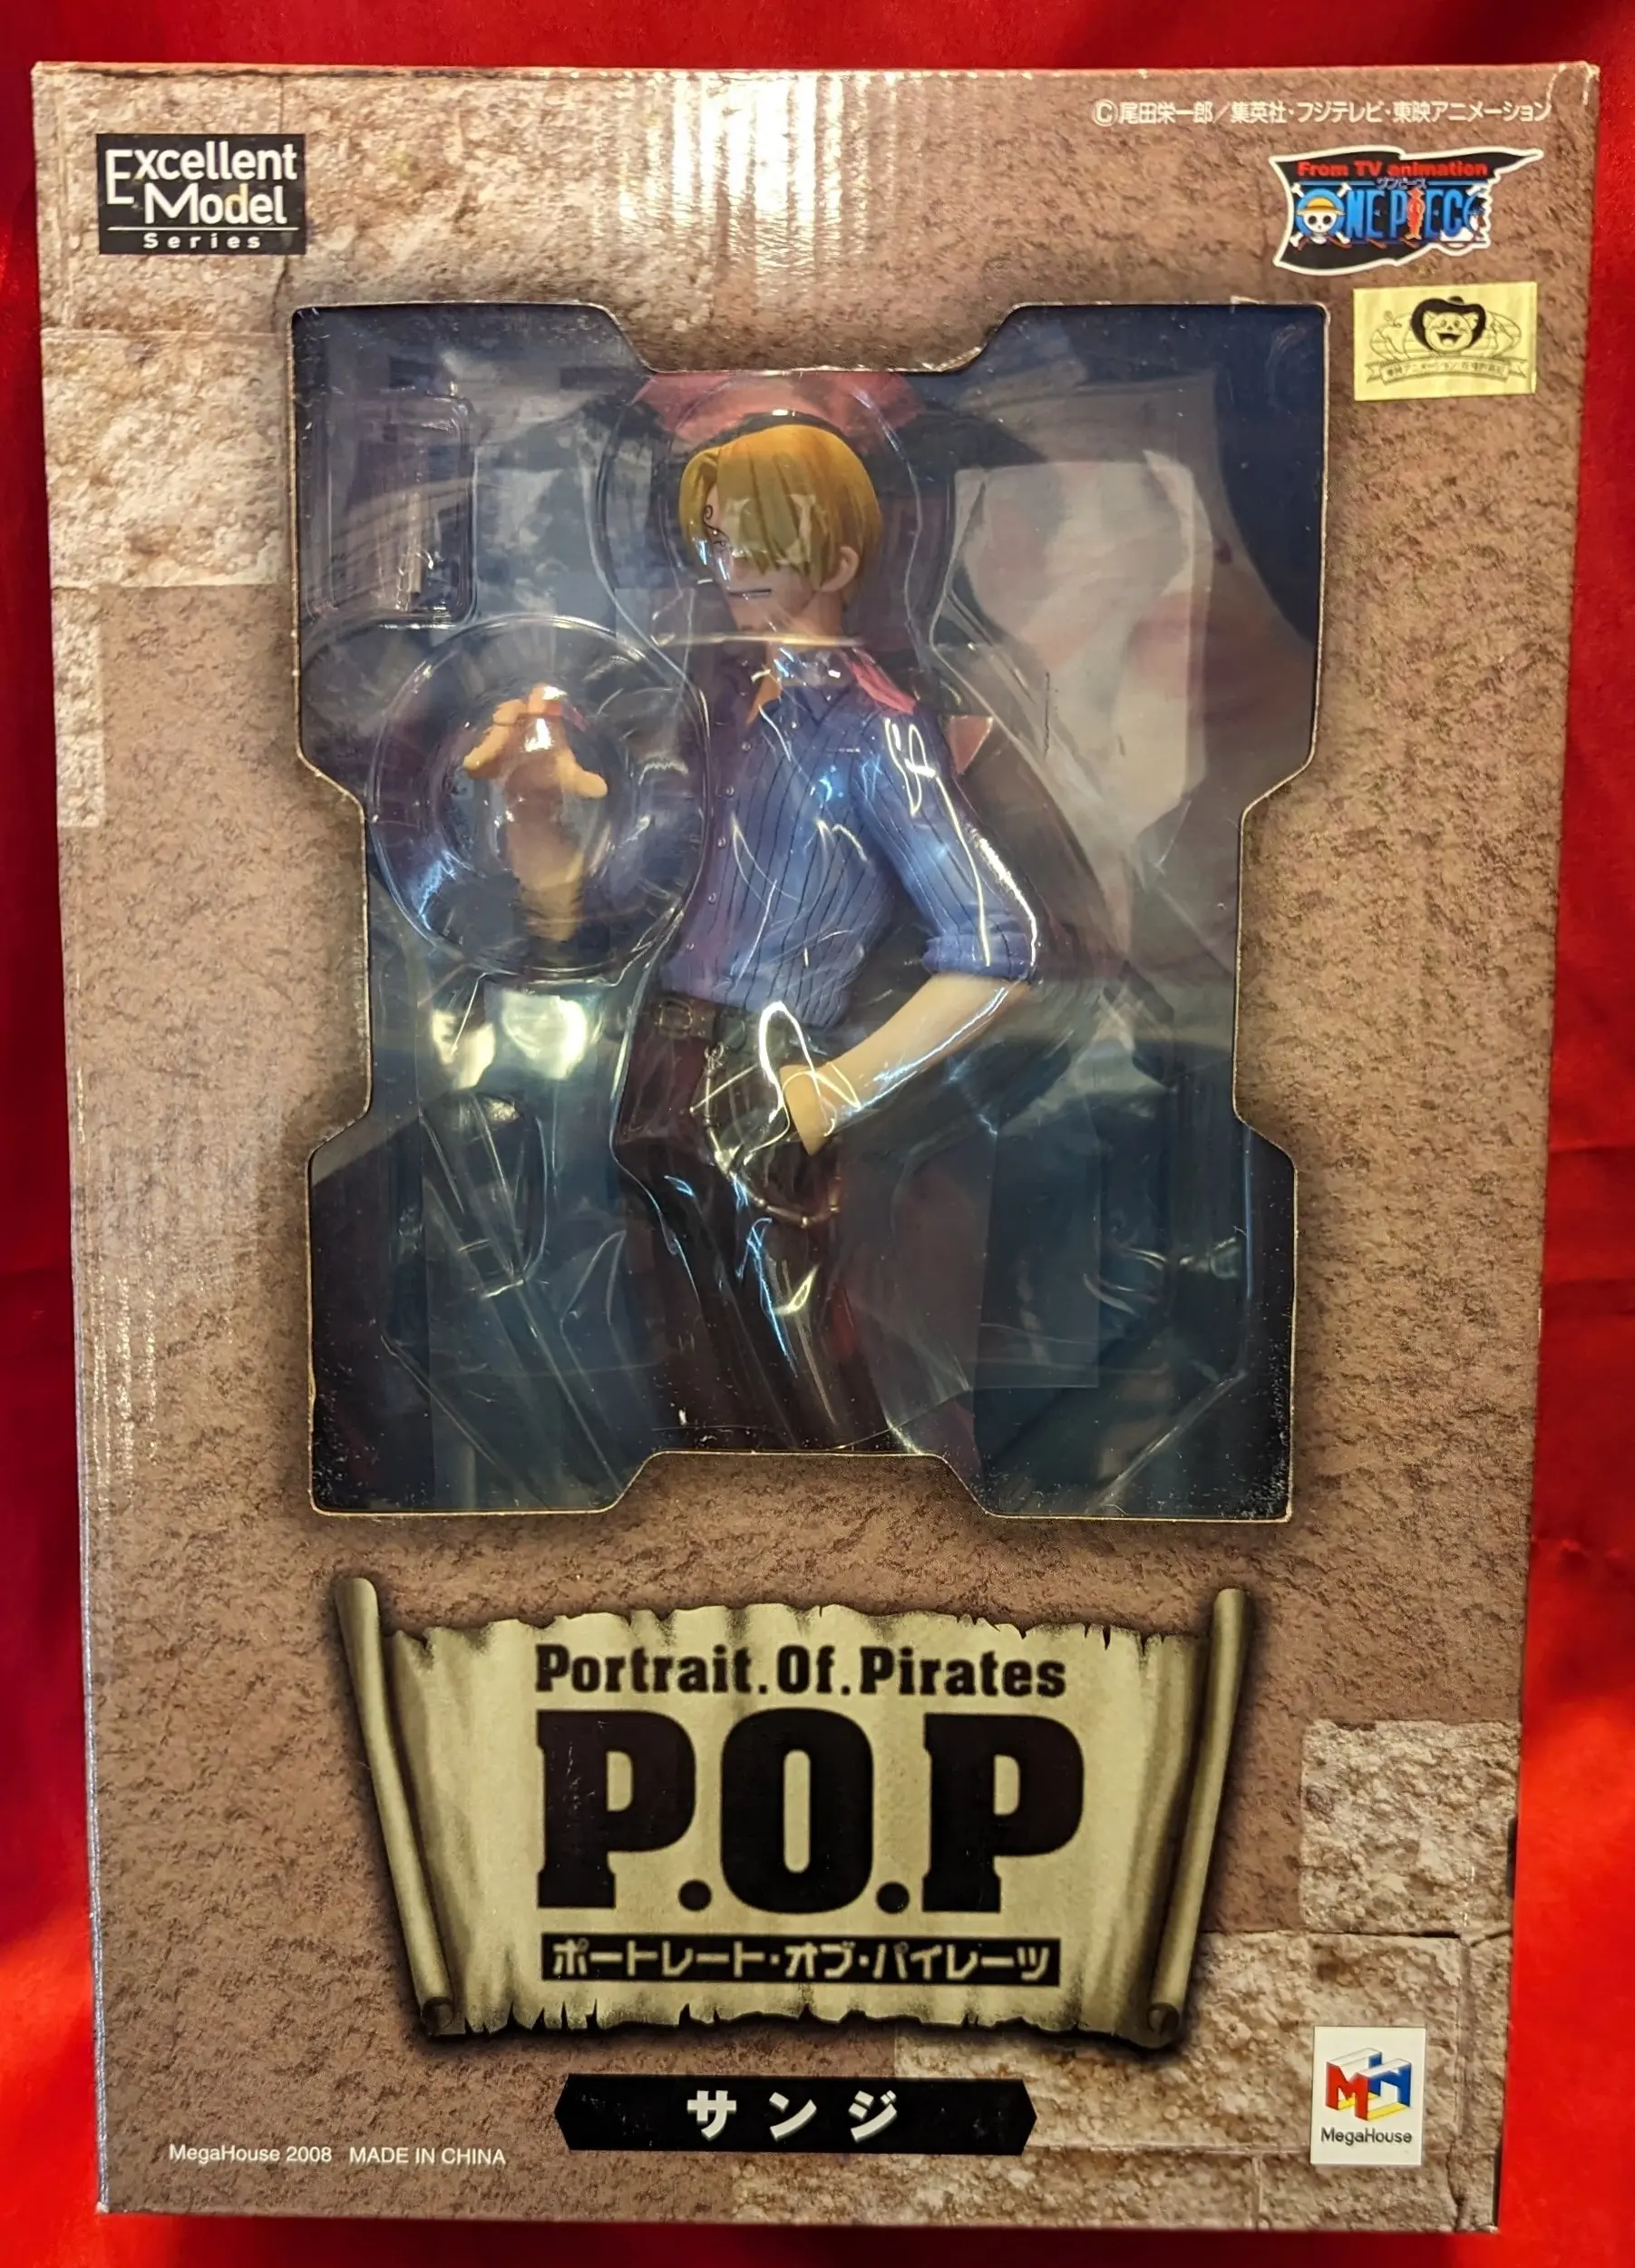 P.O.P (Portrait.Of.Pirates) - One Piece / Sanji